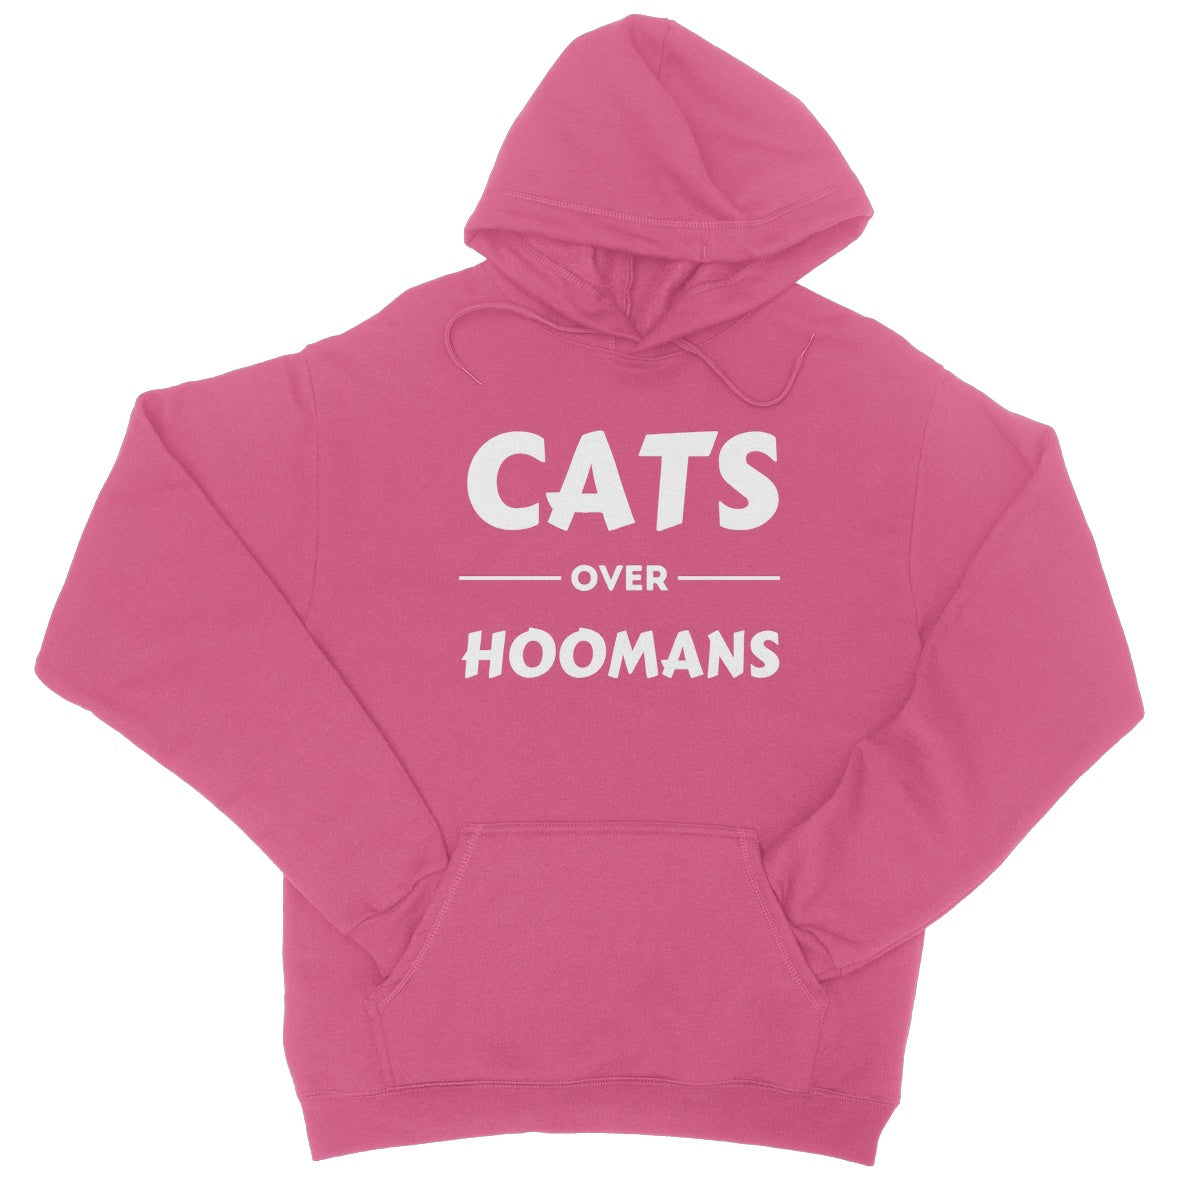 cats over hoomans hoodie pink